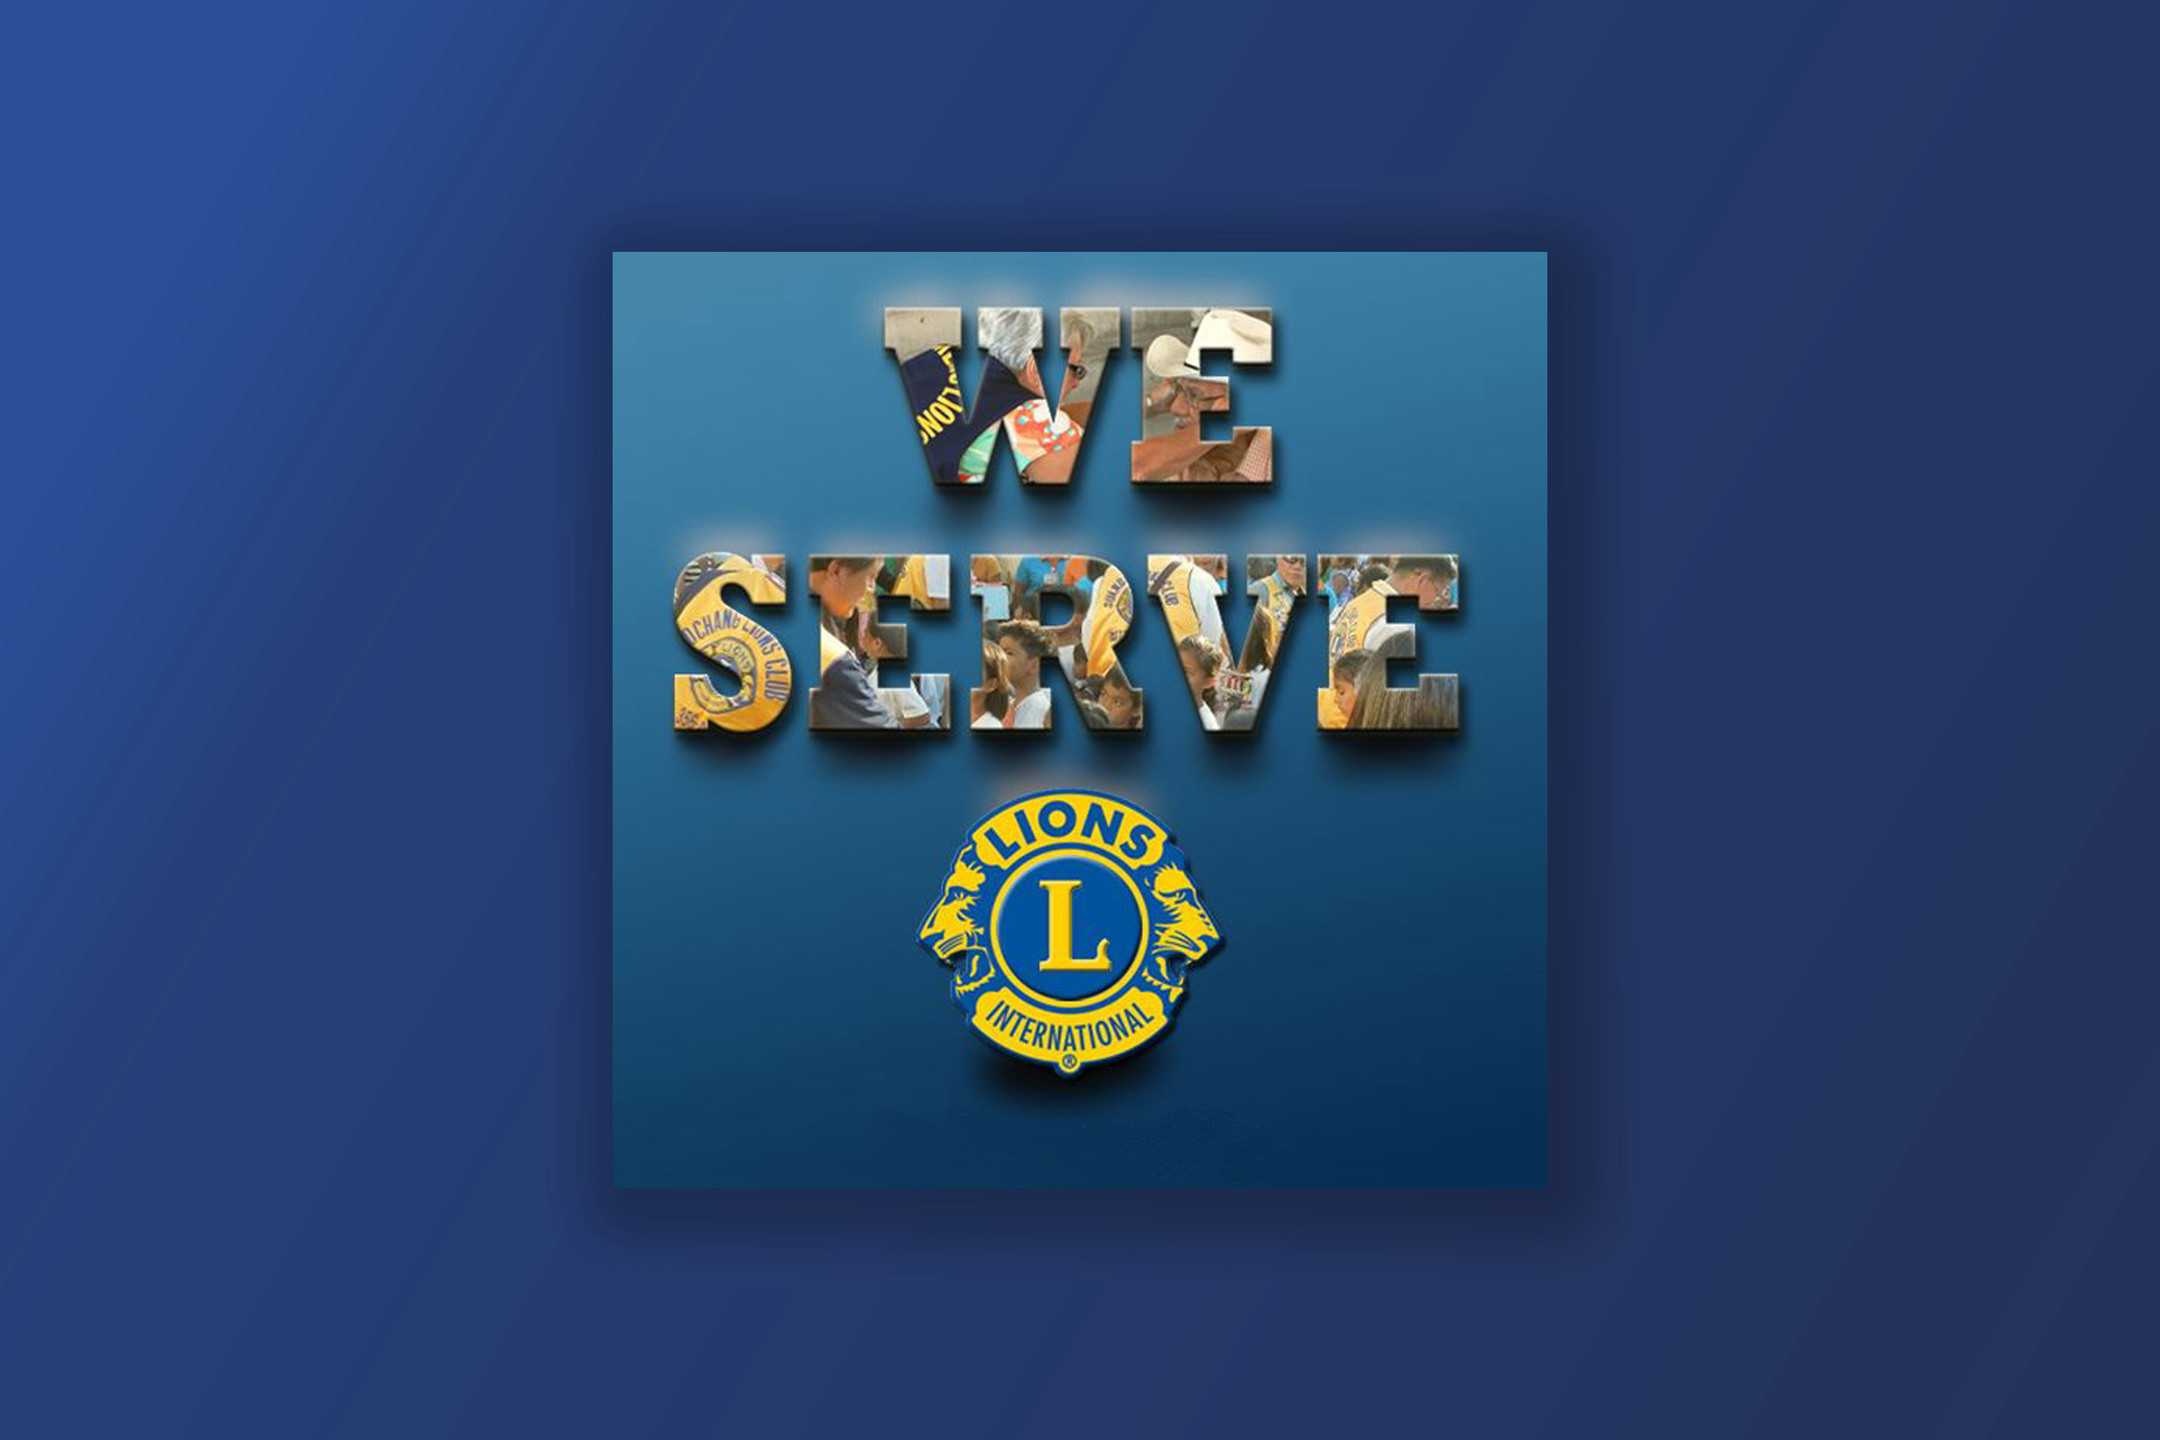 Lions - we serve